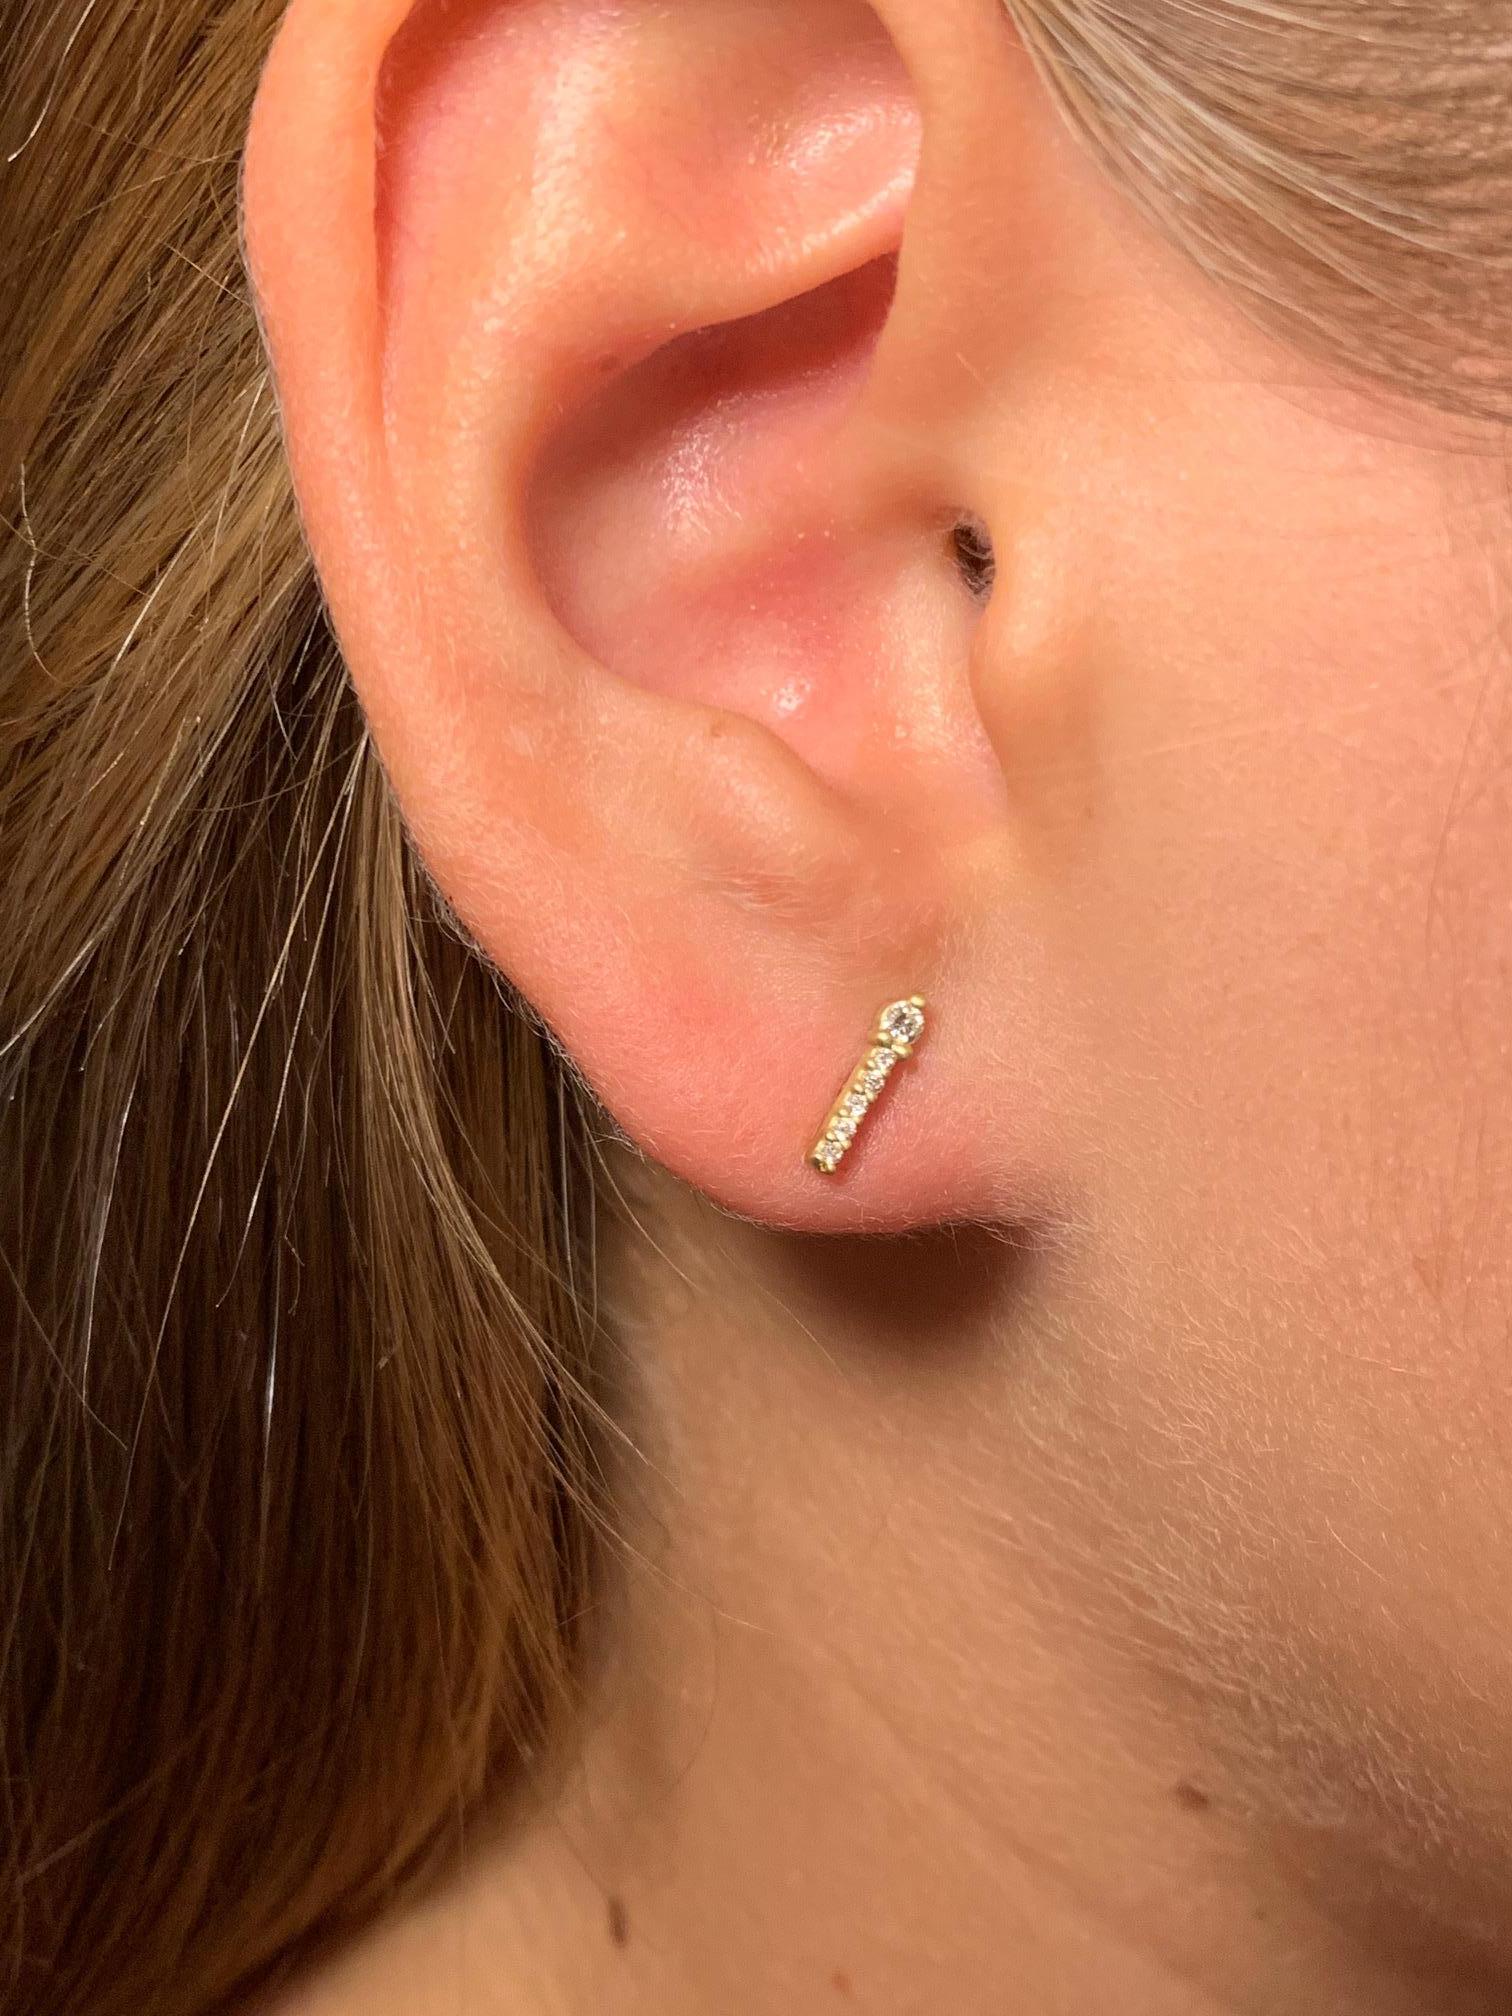 18k Yellow Gold Diamond Earring
Approximately 3/8”
Diamond .10ct